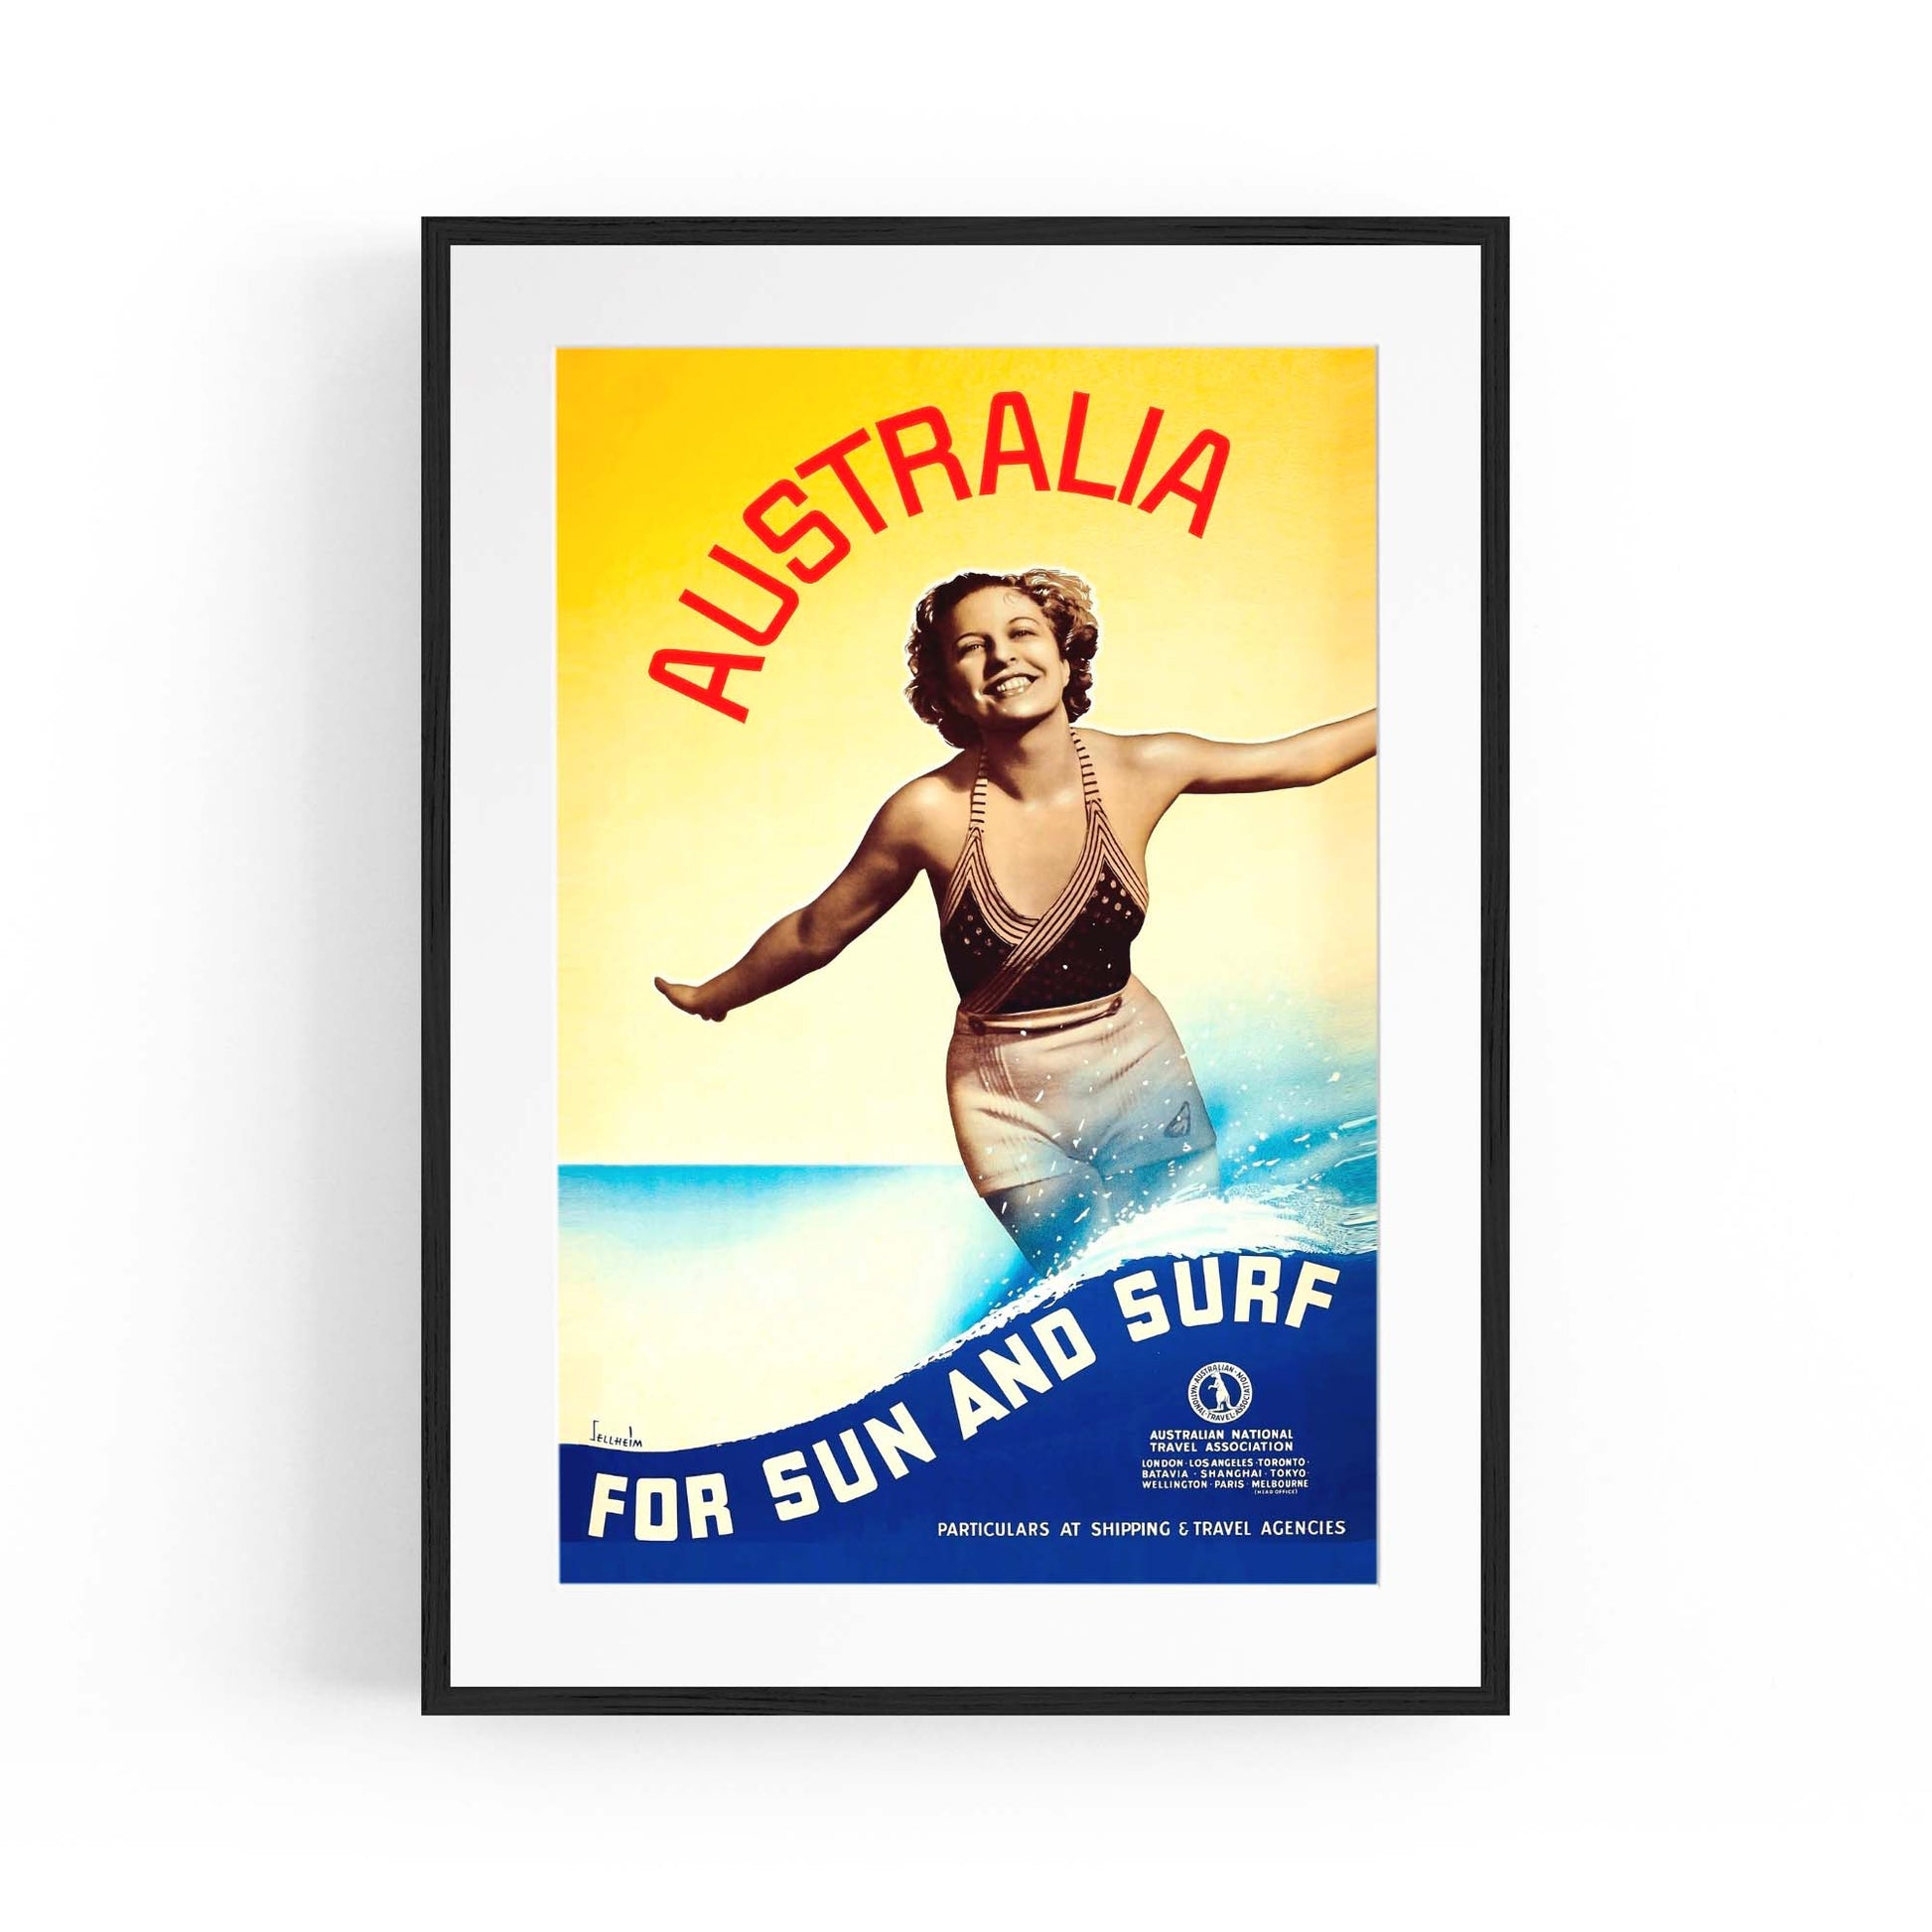 Vintage Australia Sun & Surf Travel Advert Wall Art - The Affordable Art Company